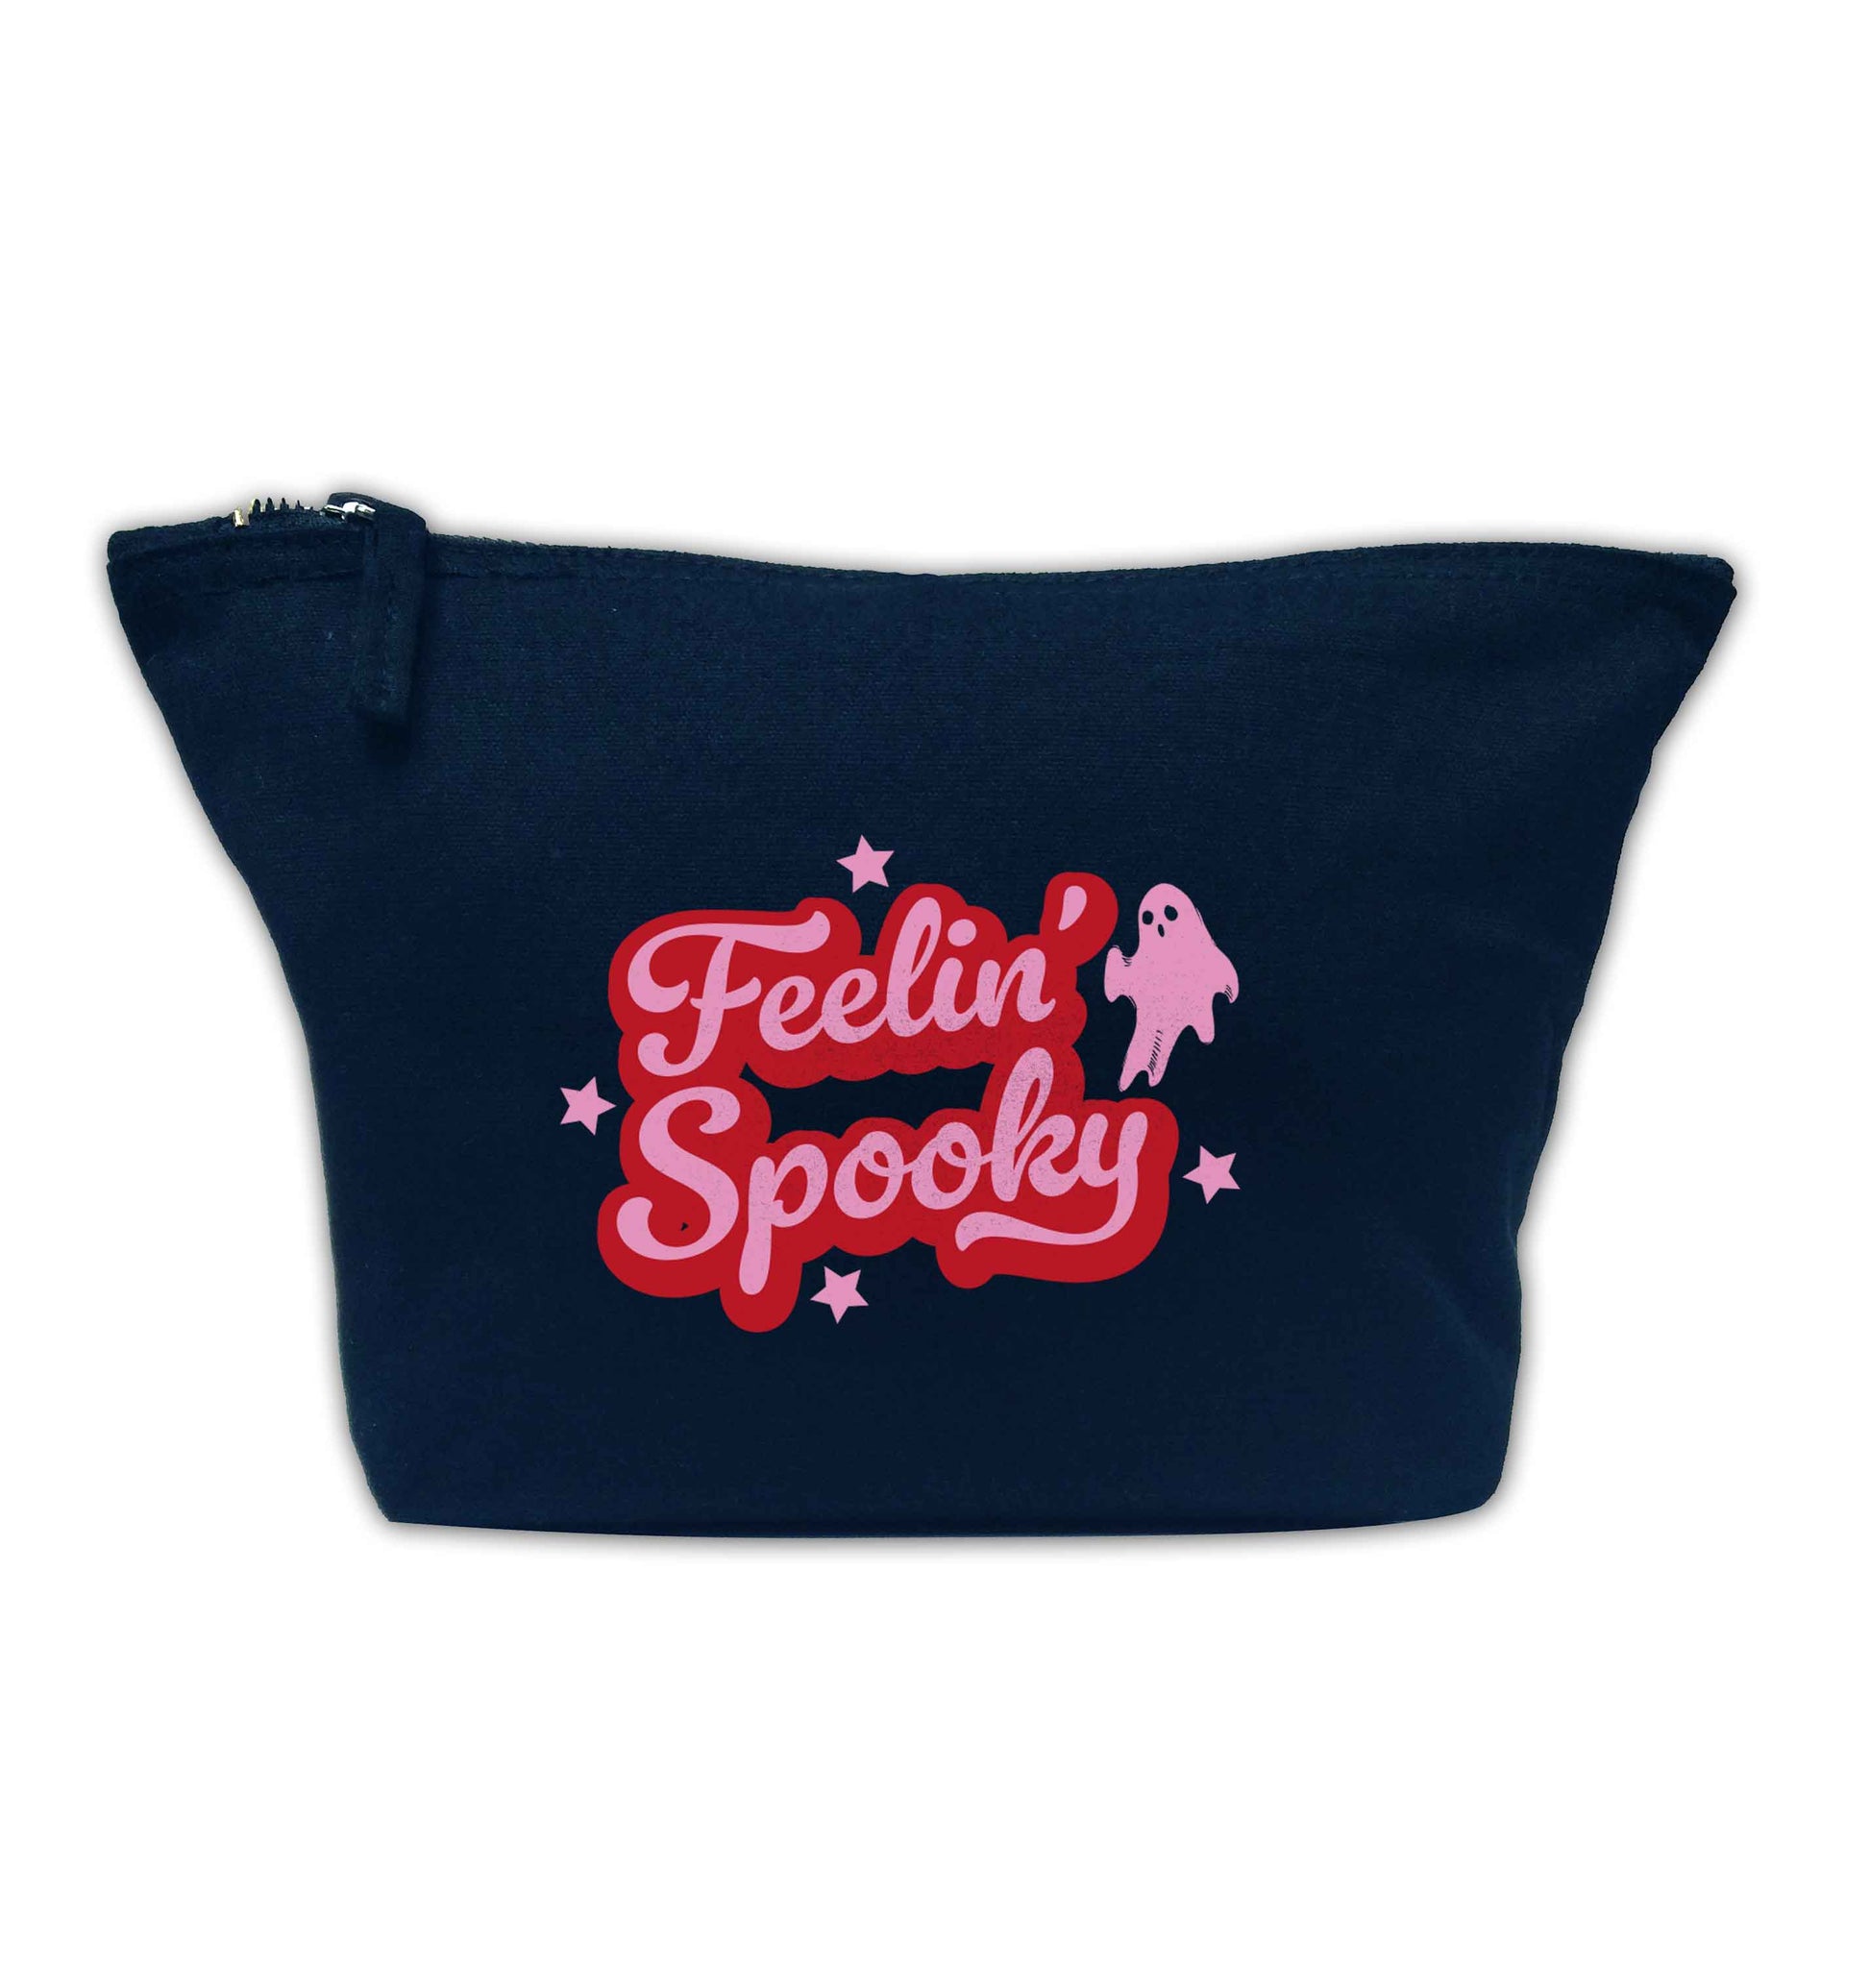 Feelin' Spooky Kit navy makeup bag